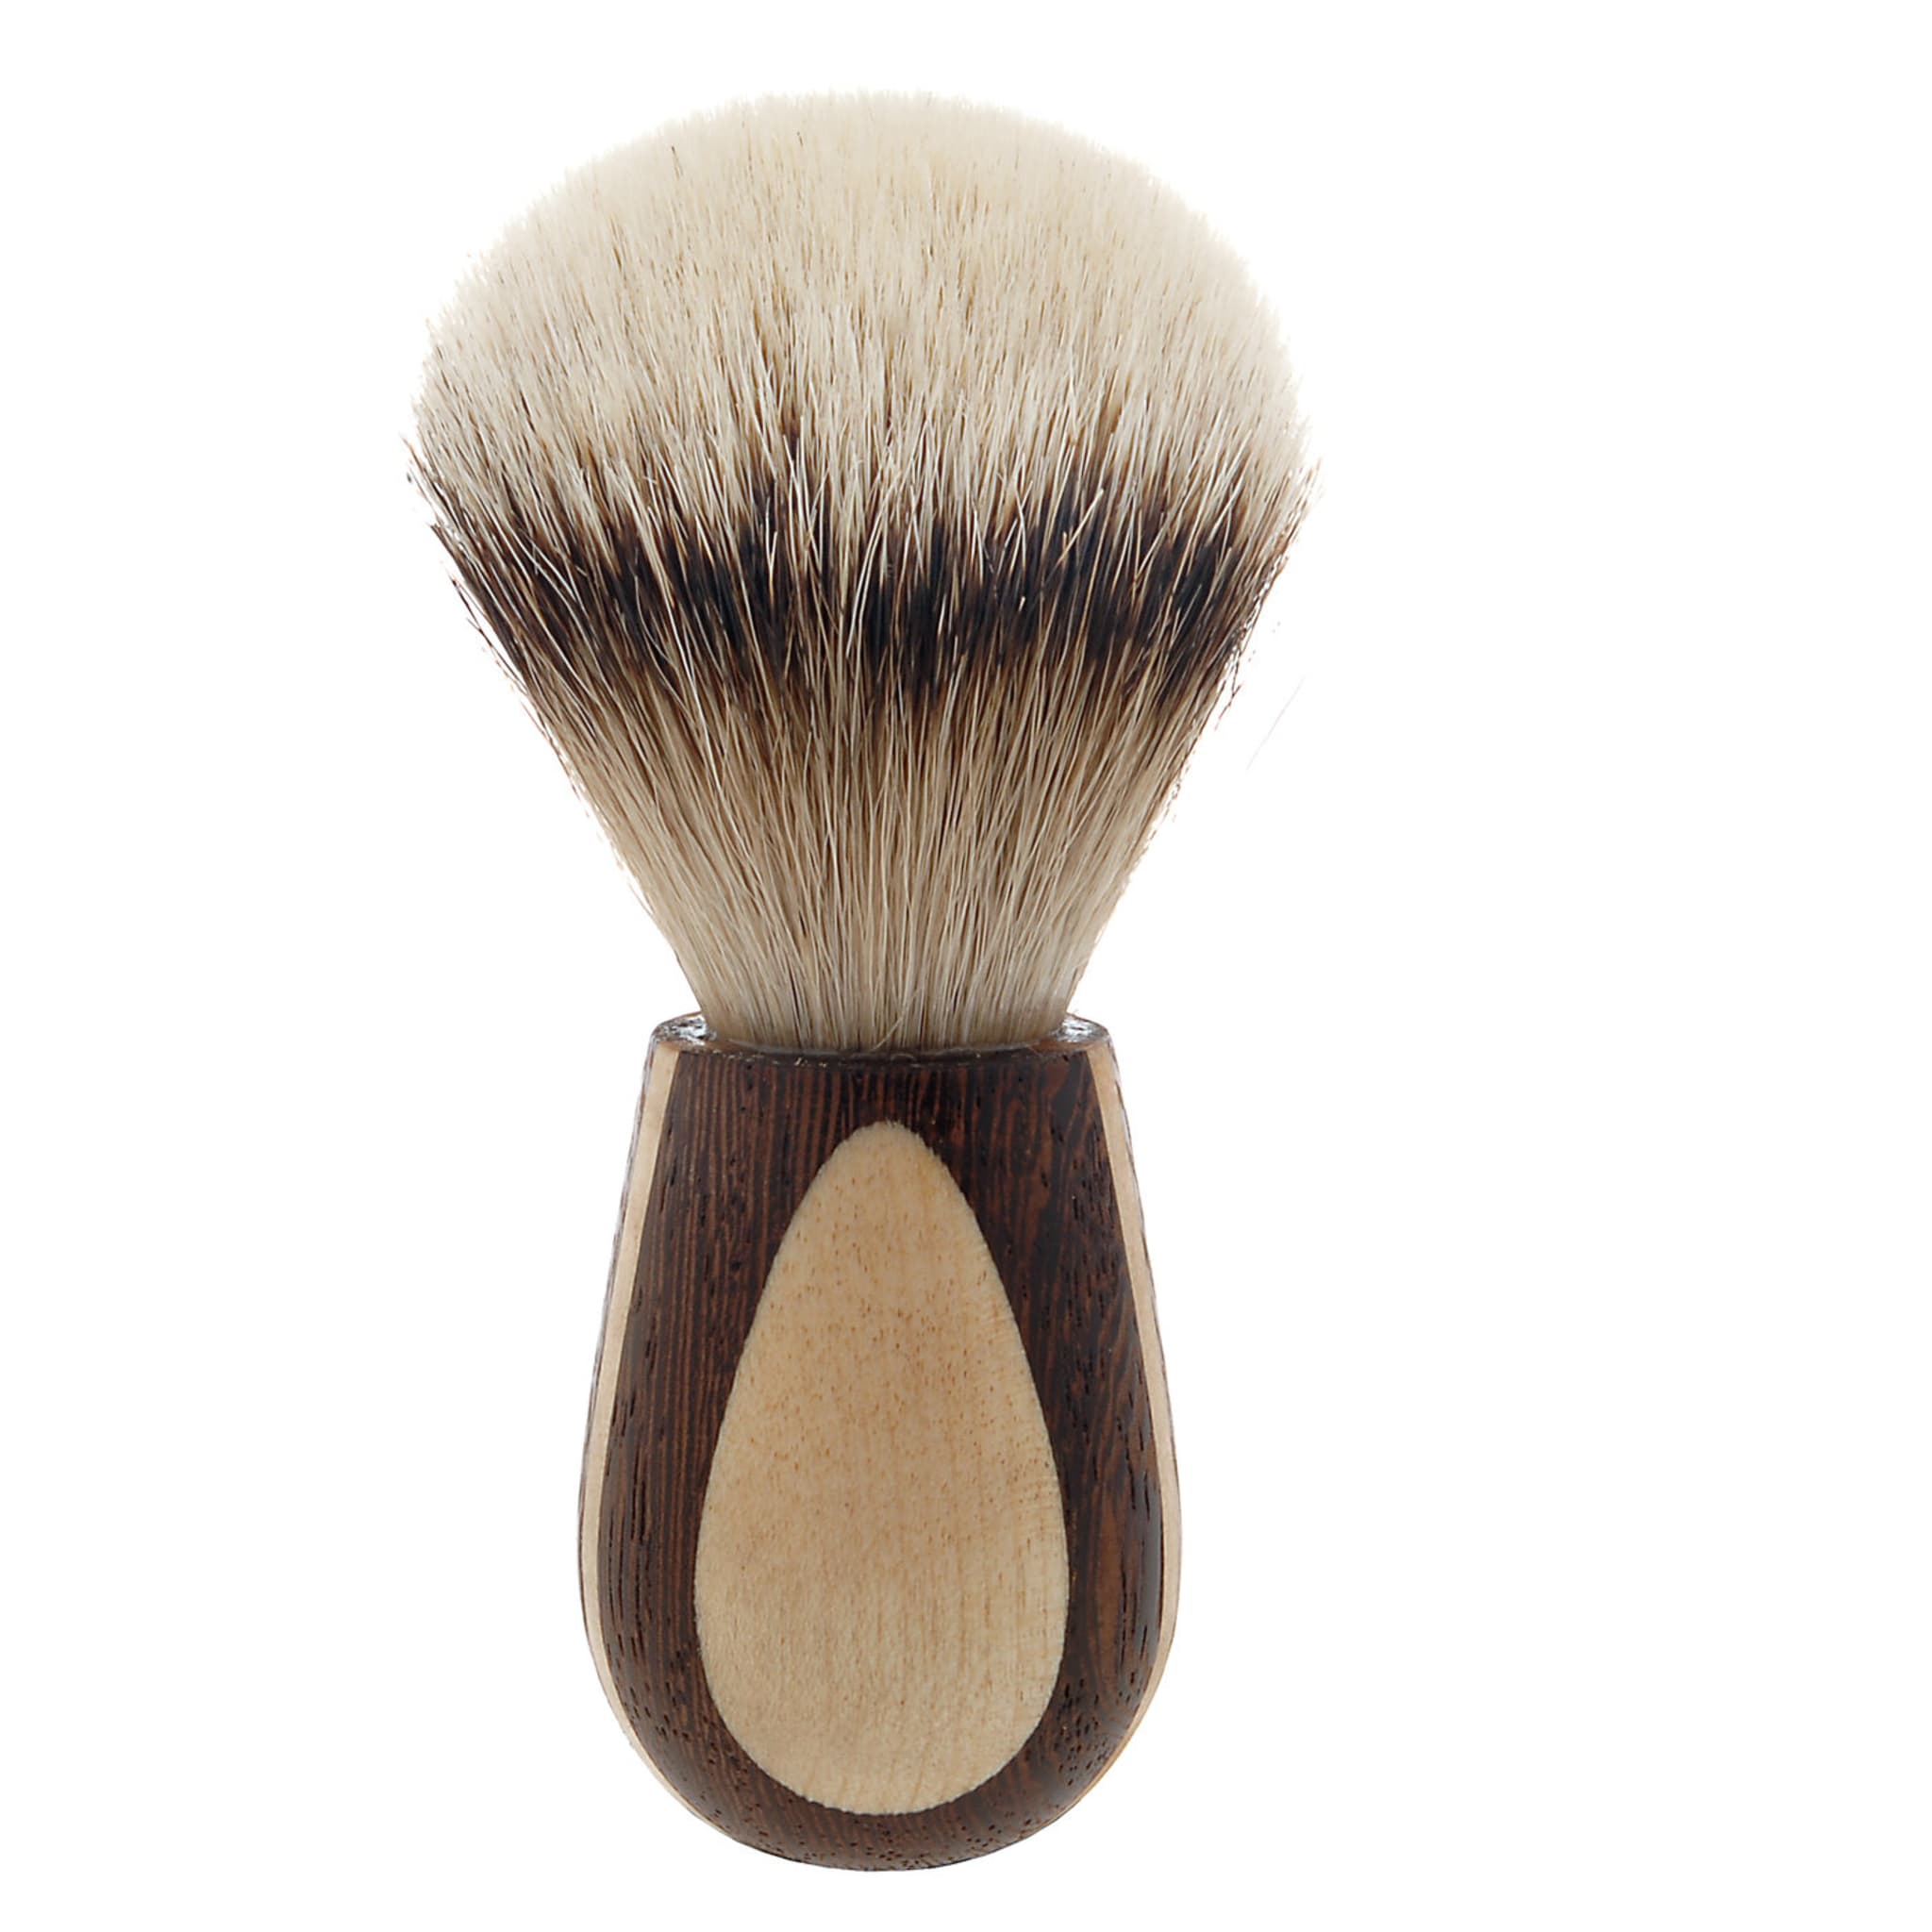 Shaving Brush in Wenge and Maple Wood - Alternative view 2